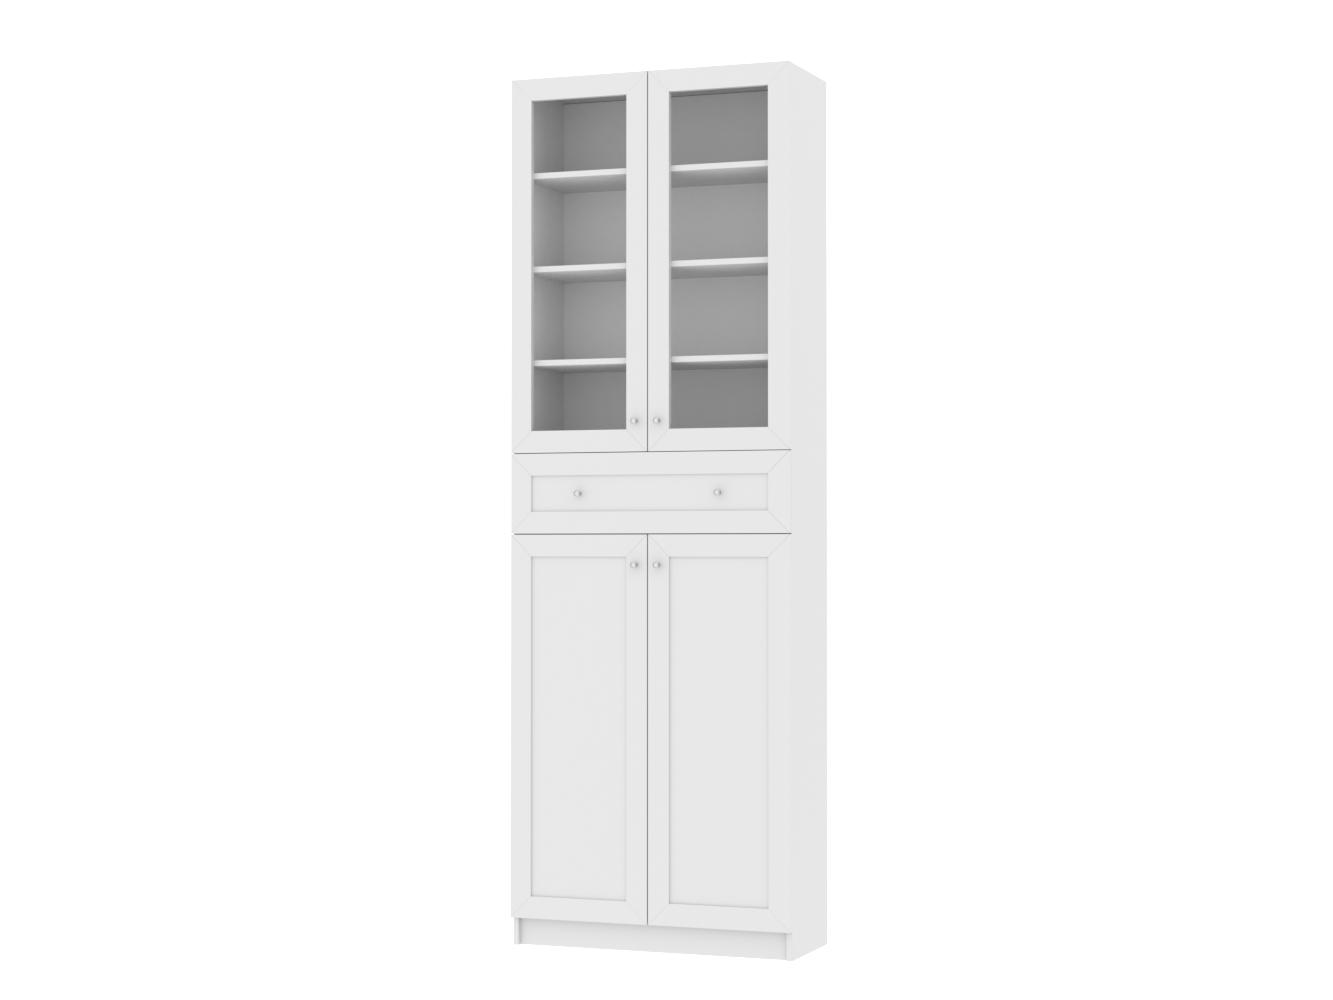 Книжный шкаф Билли 314 white ИКЕА (IKEA) изображение товара